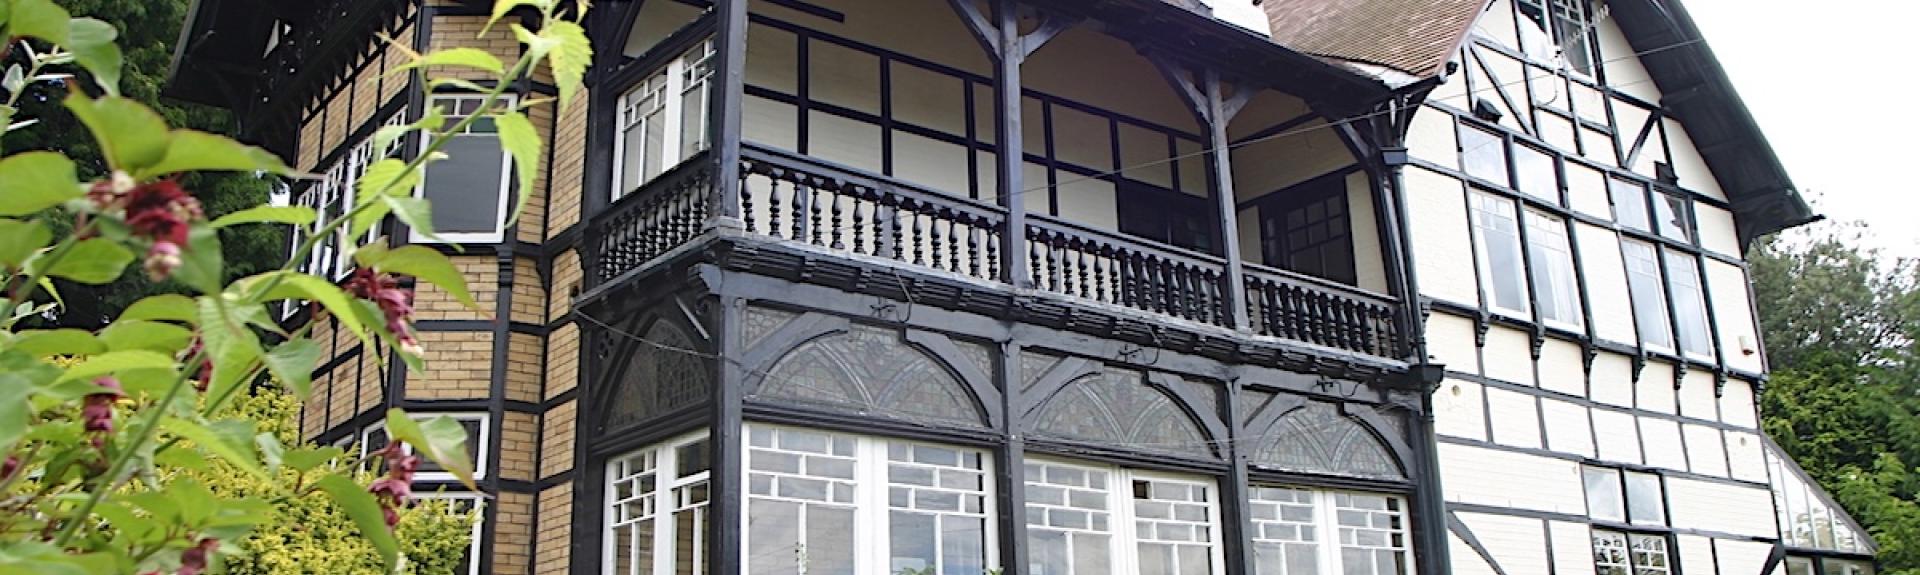 Exterior of a large mock Tudor house with 1st floor balcony.